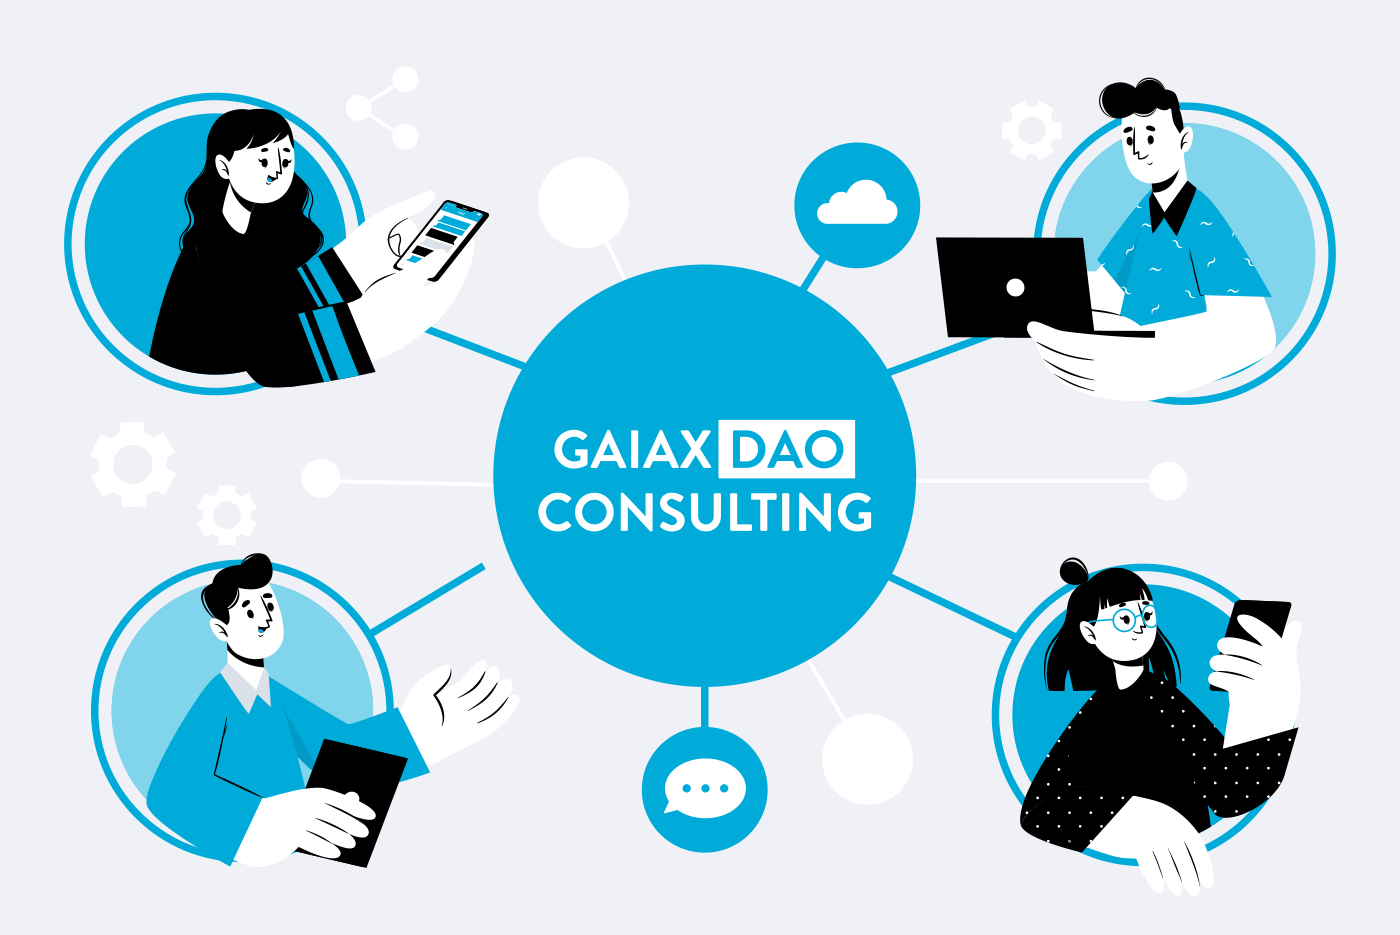 Gaiax DAO consulting